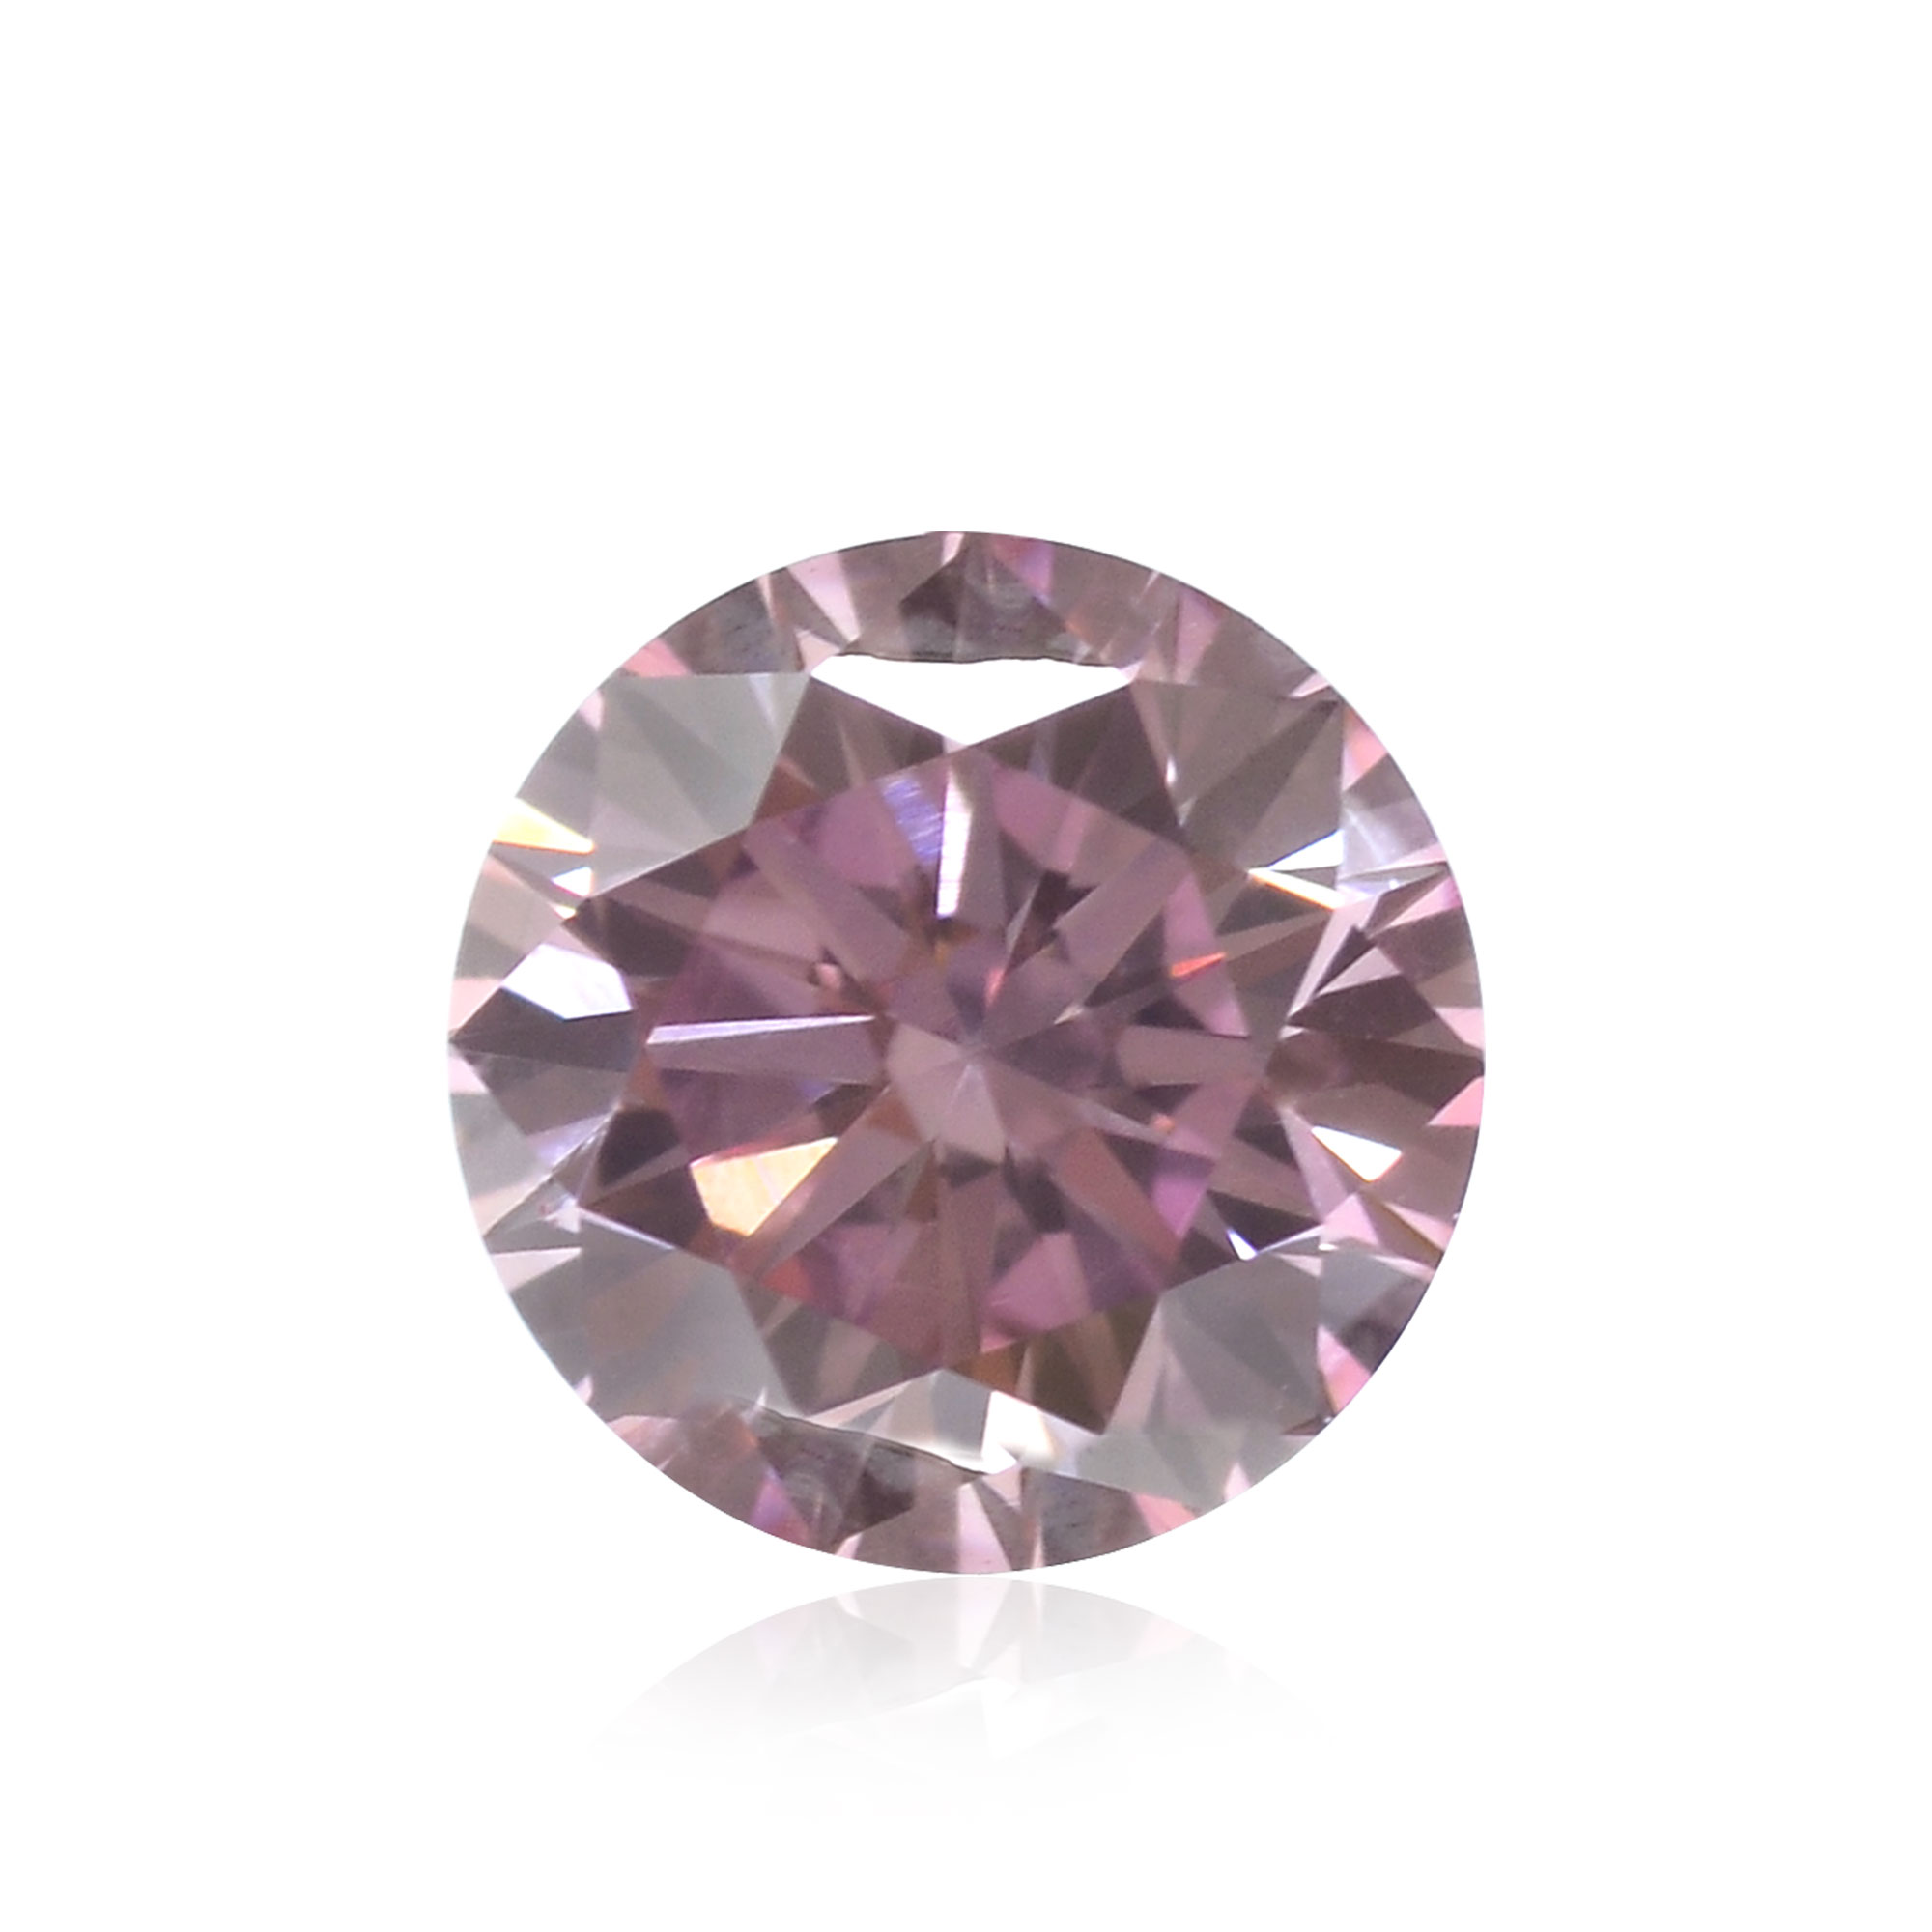 0.52 carat, Fancy Intense Purplish Pink, Round Shape, VS1 Clarity, ARGYLE, SKU 123830